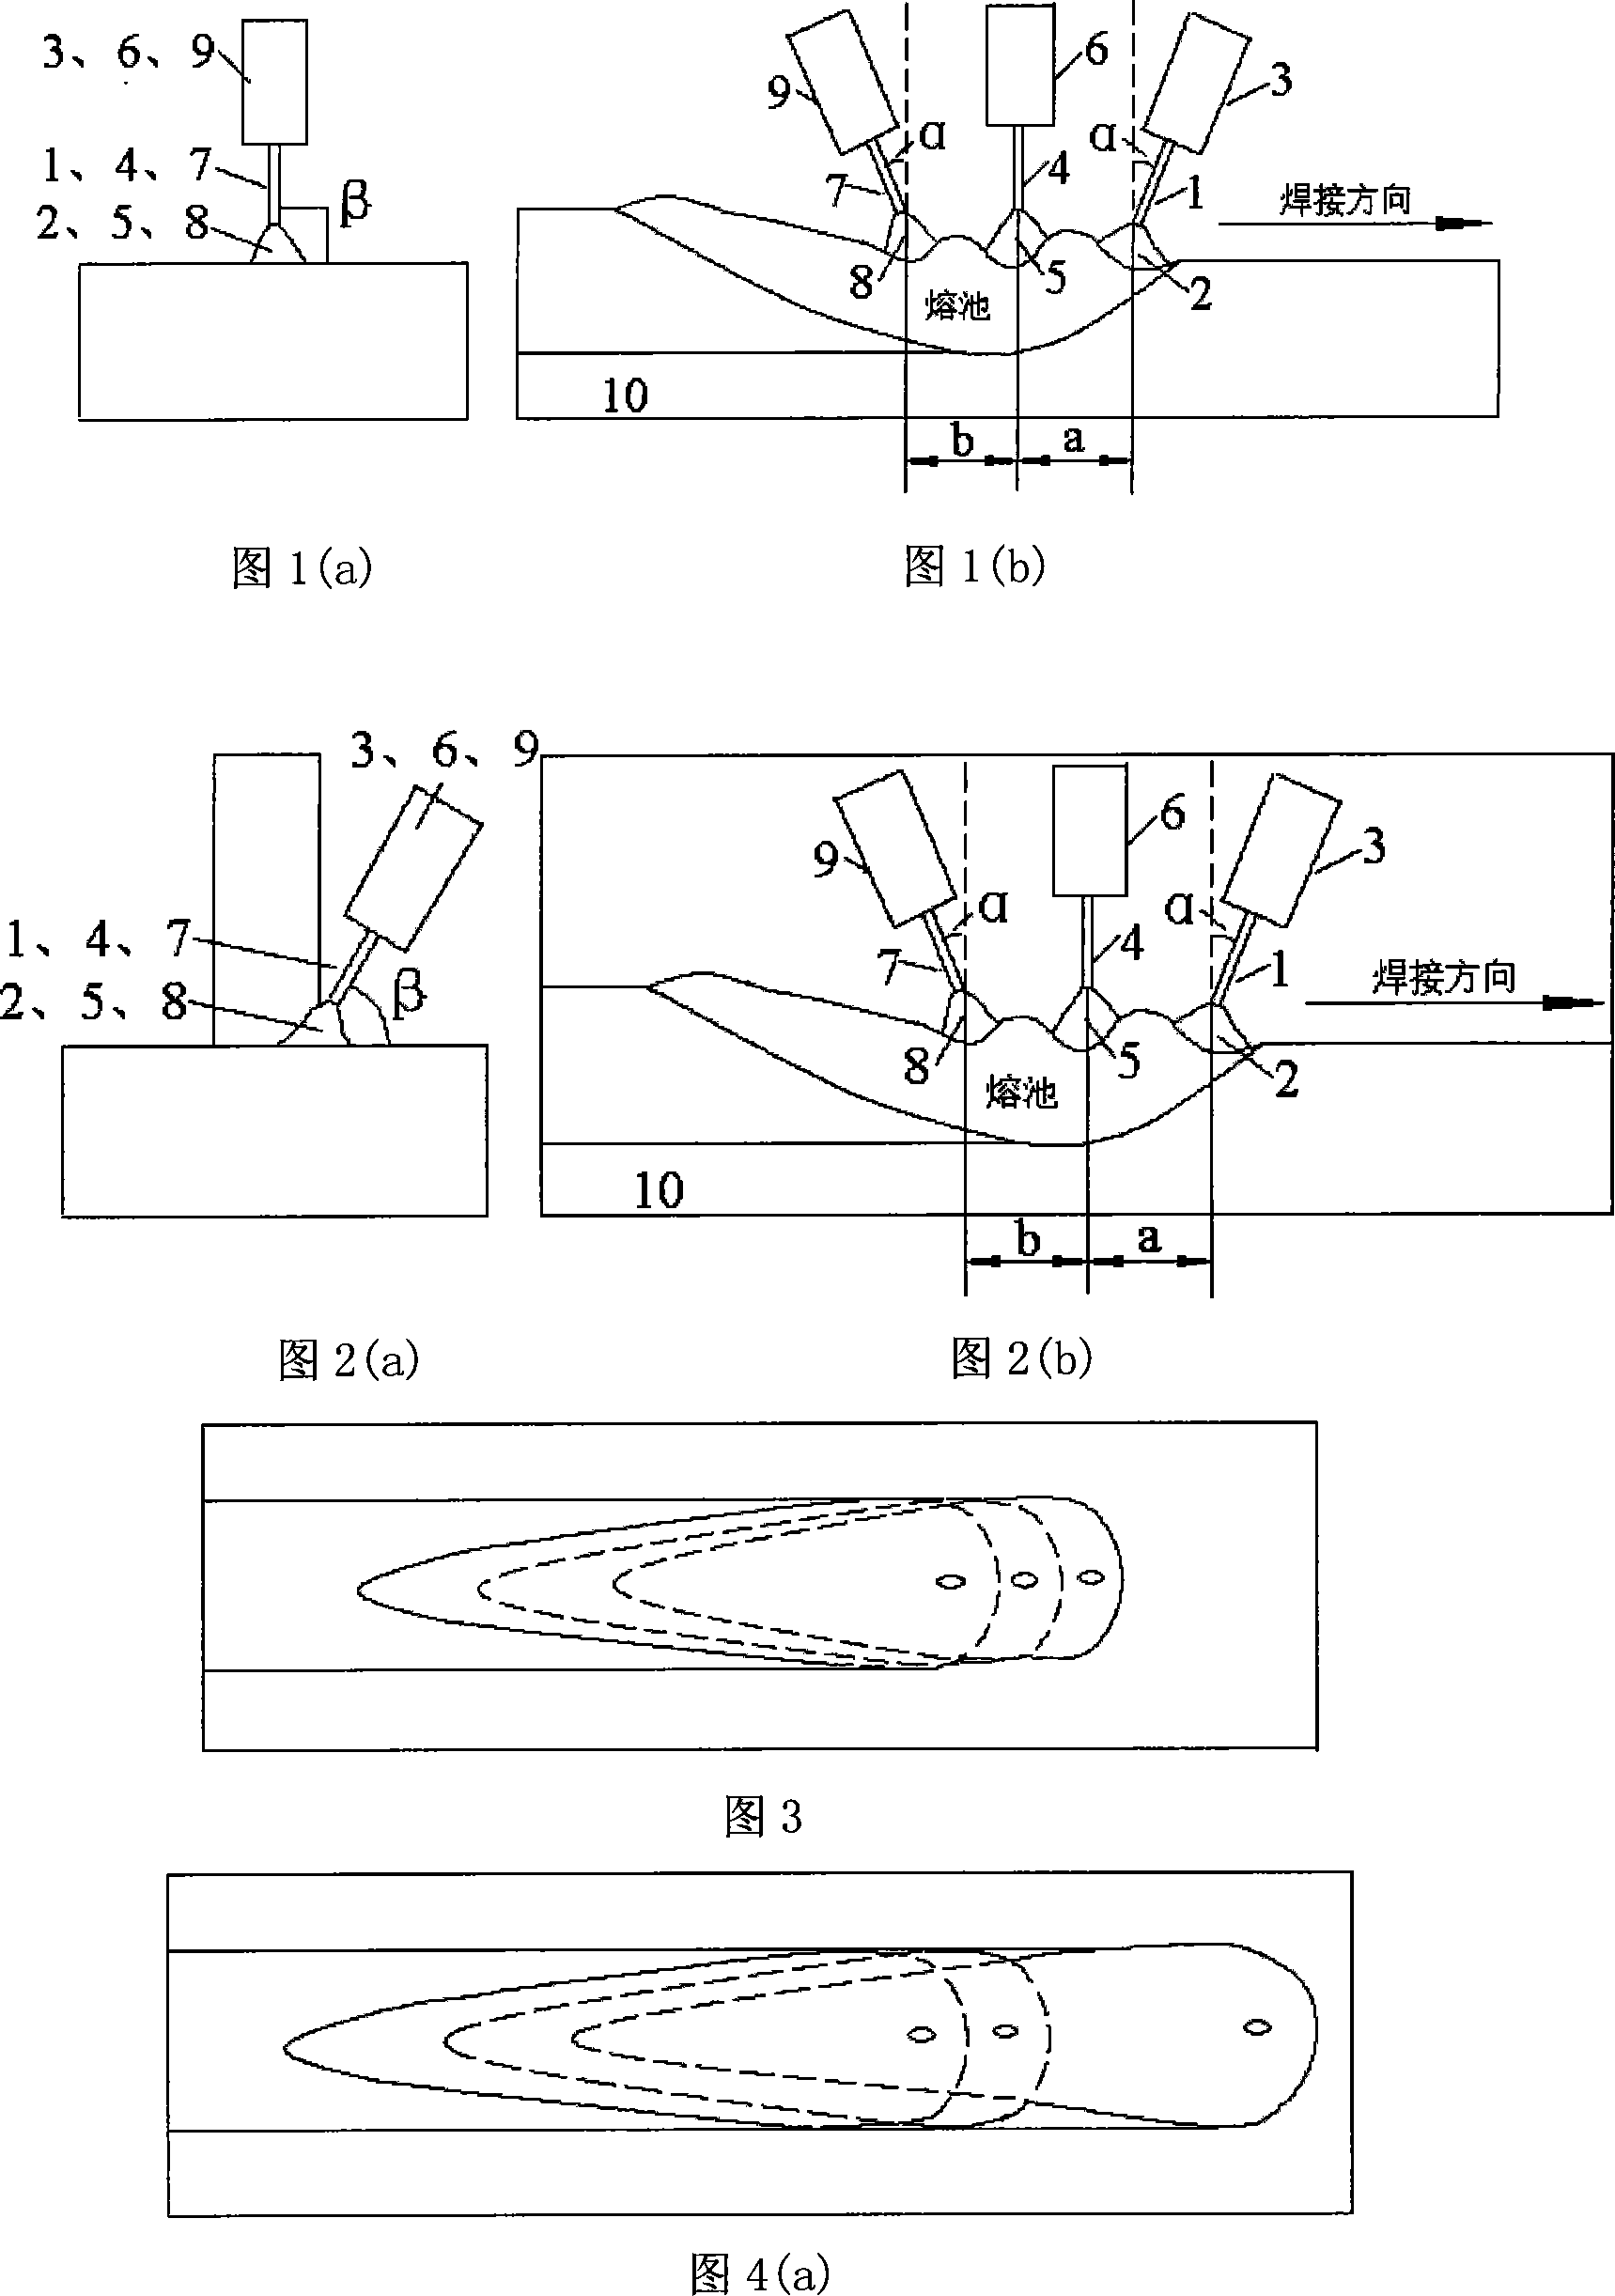 Three-filum open arc welding method